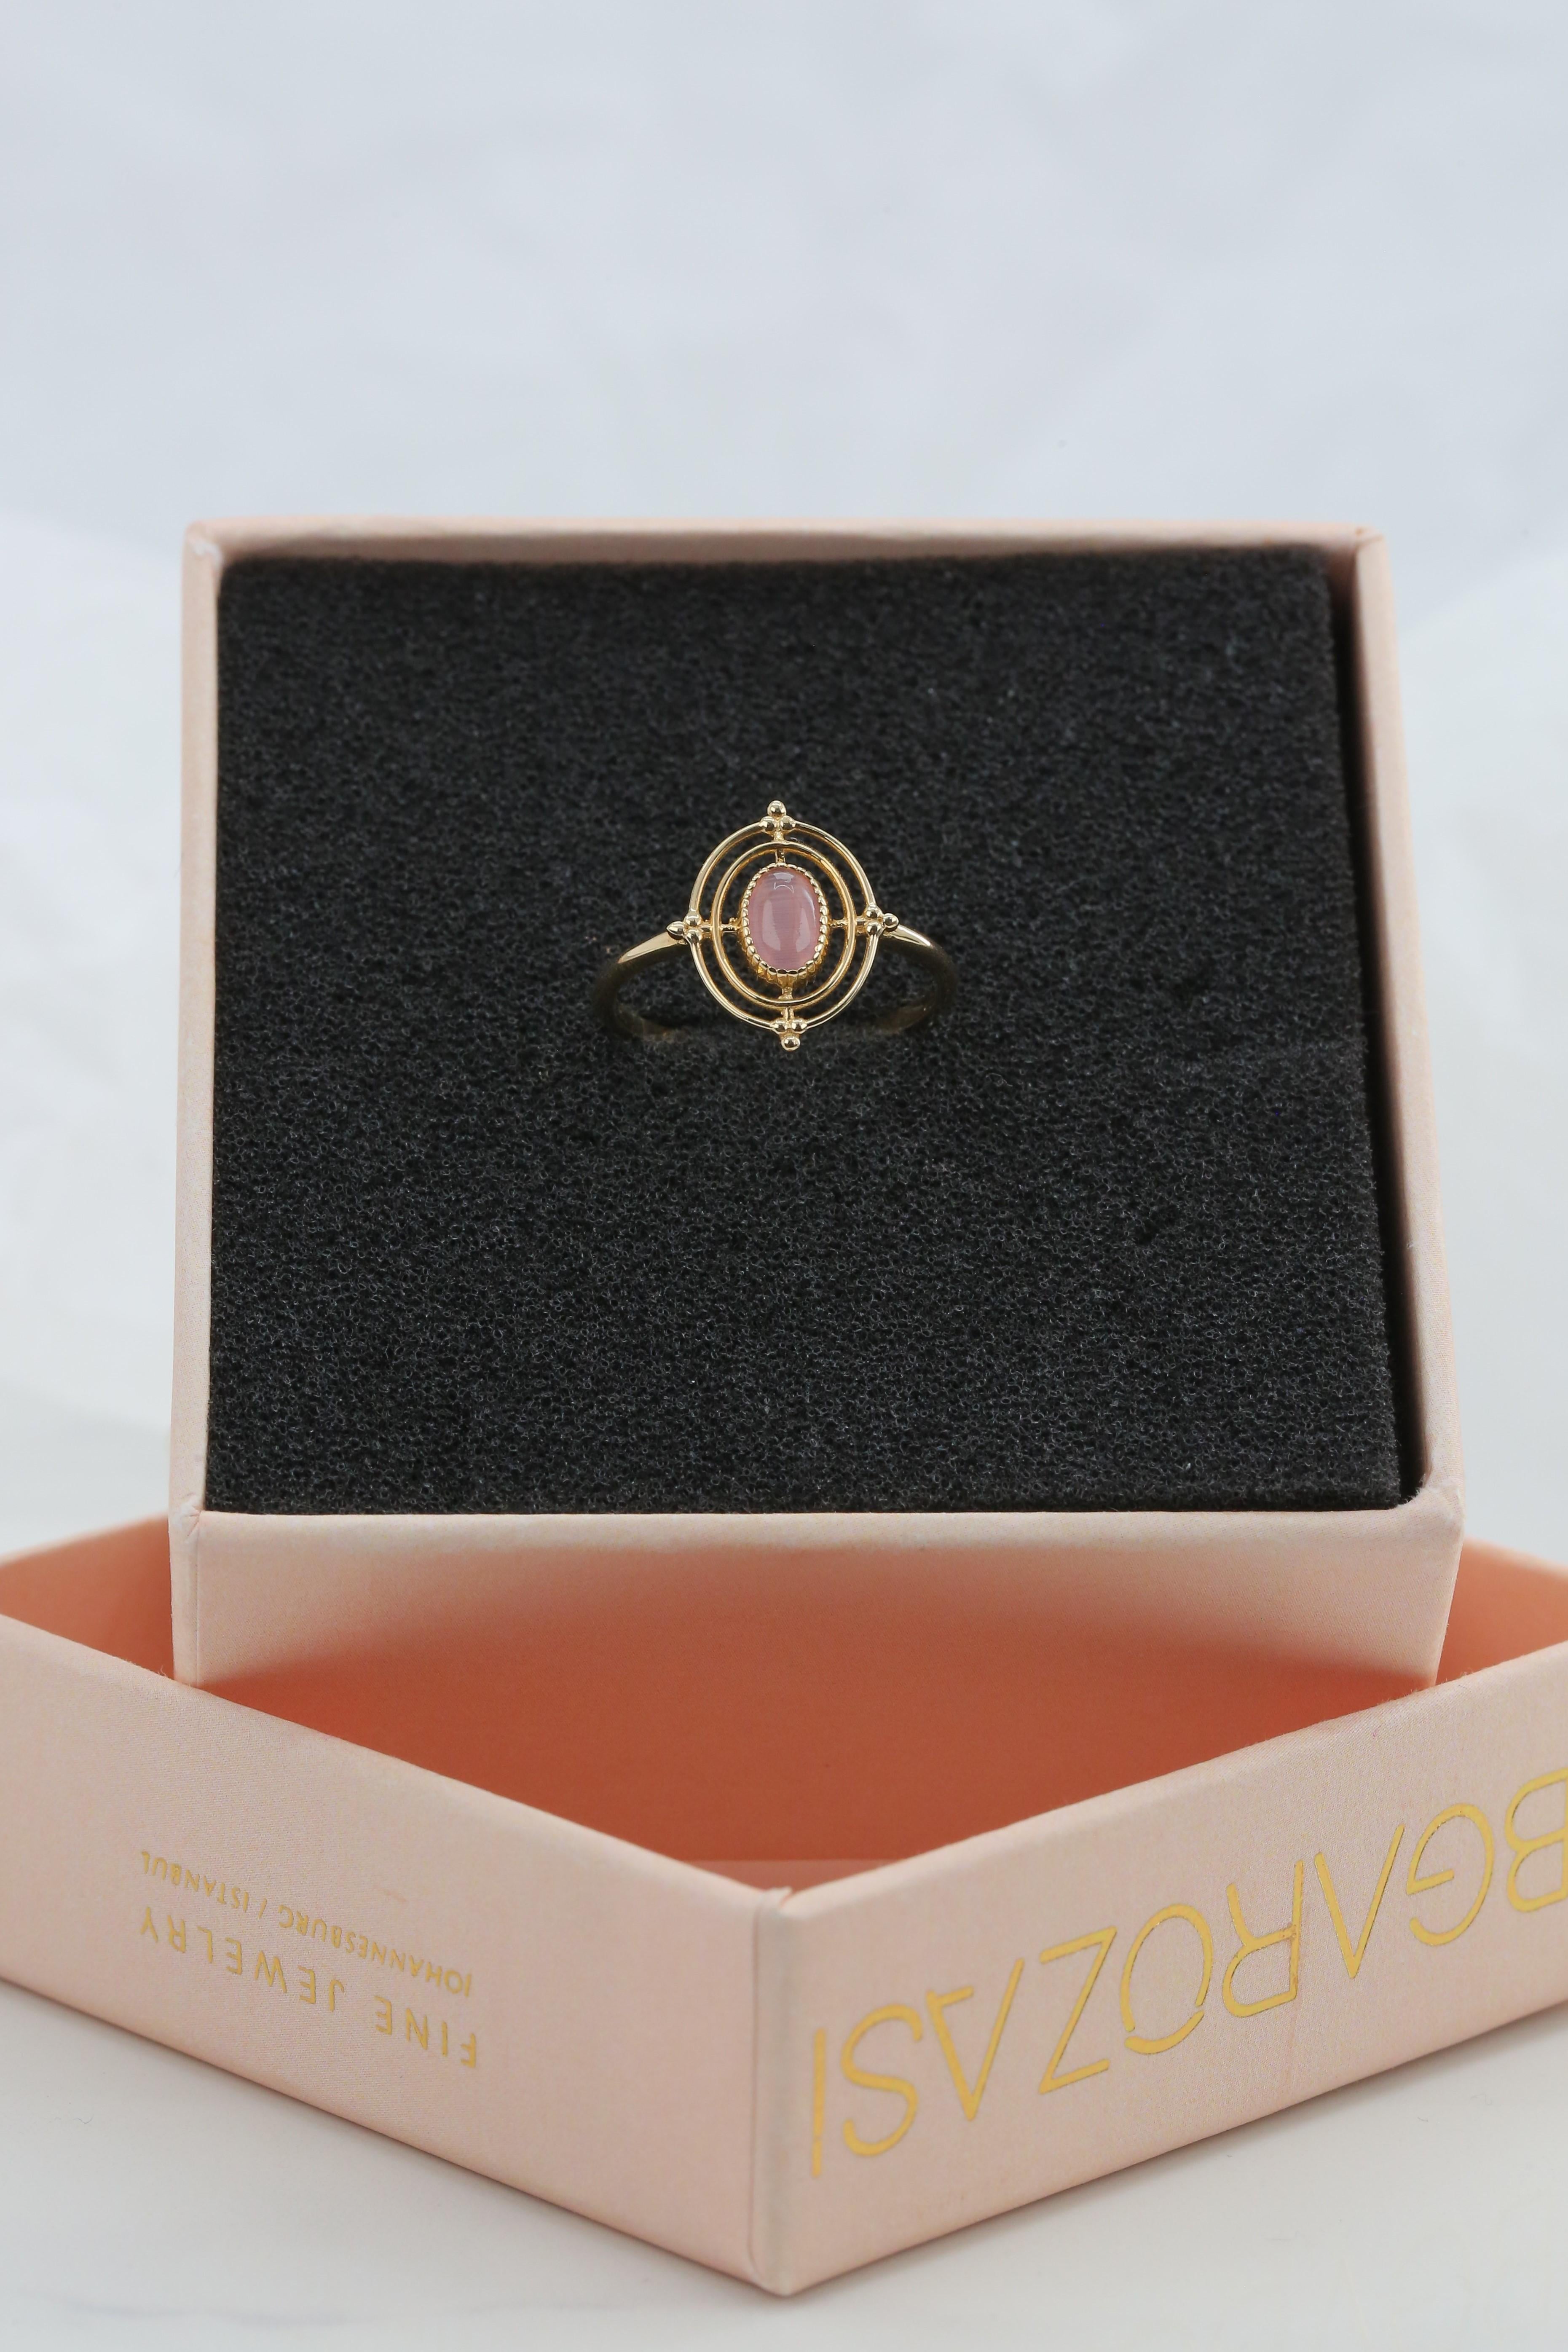 For Sale:  14K Gold Vintage Style Oval Cut Pink Quartz Ring 5